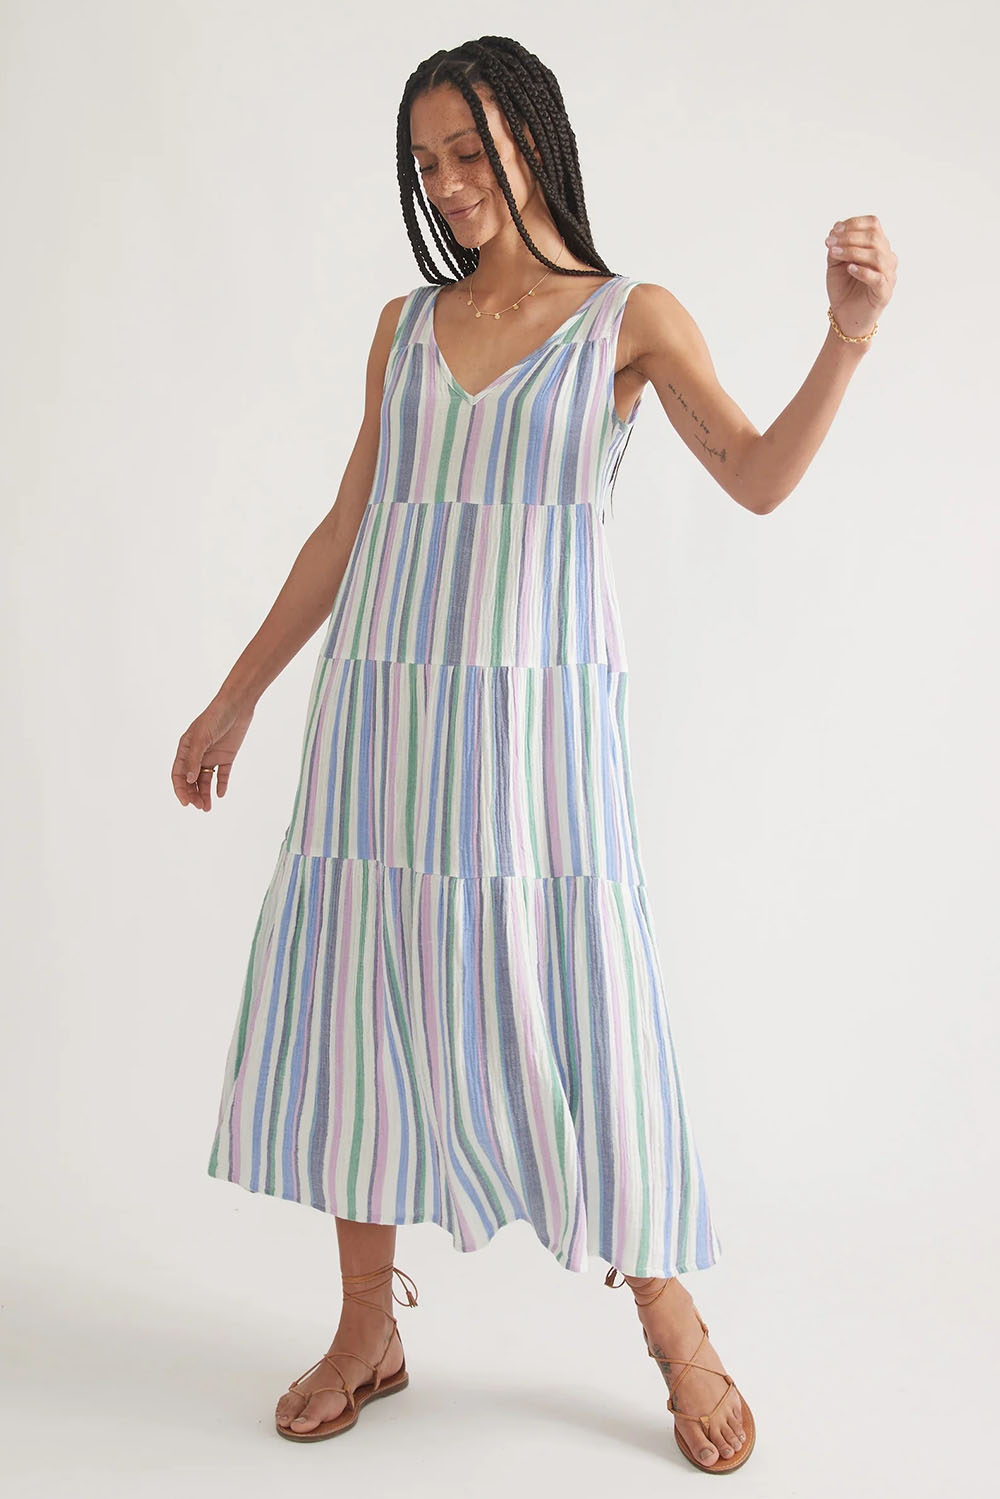 Marine Layer - Corinne Maxi Dress - Multi Cool Stripe - Profile